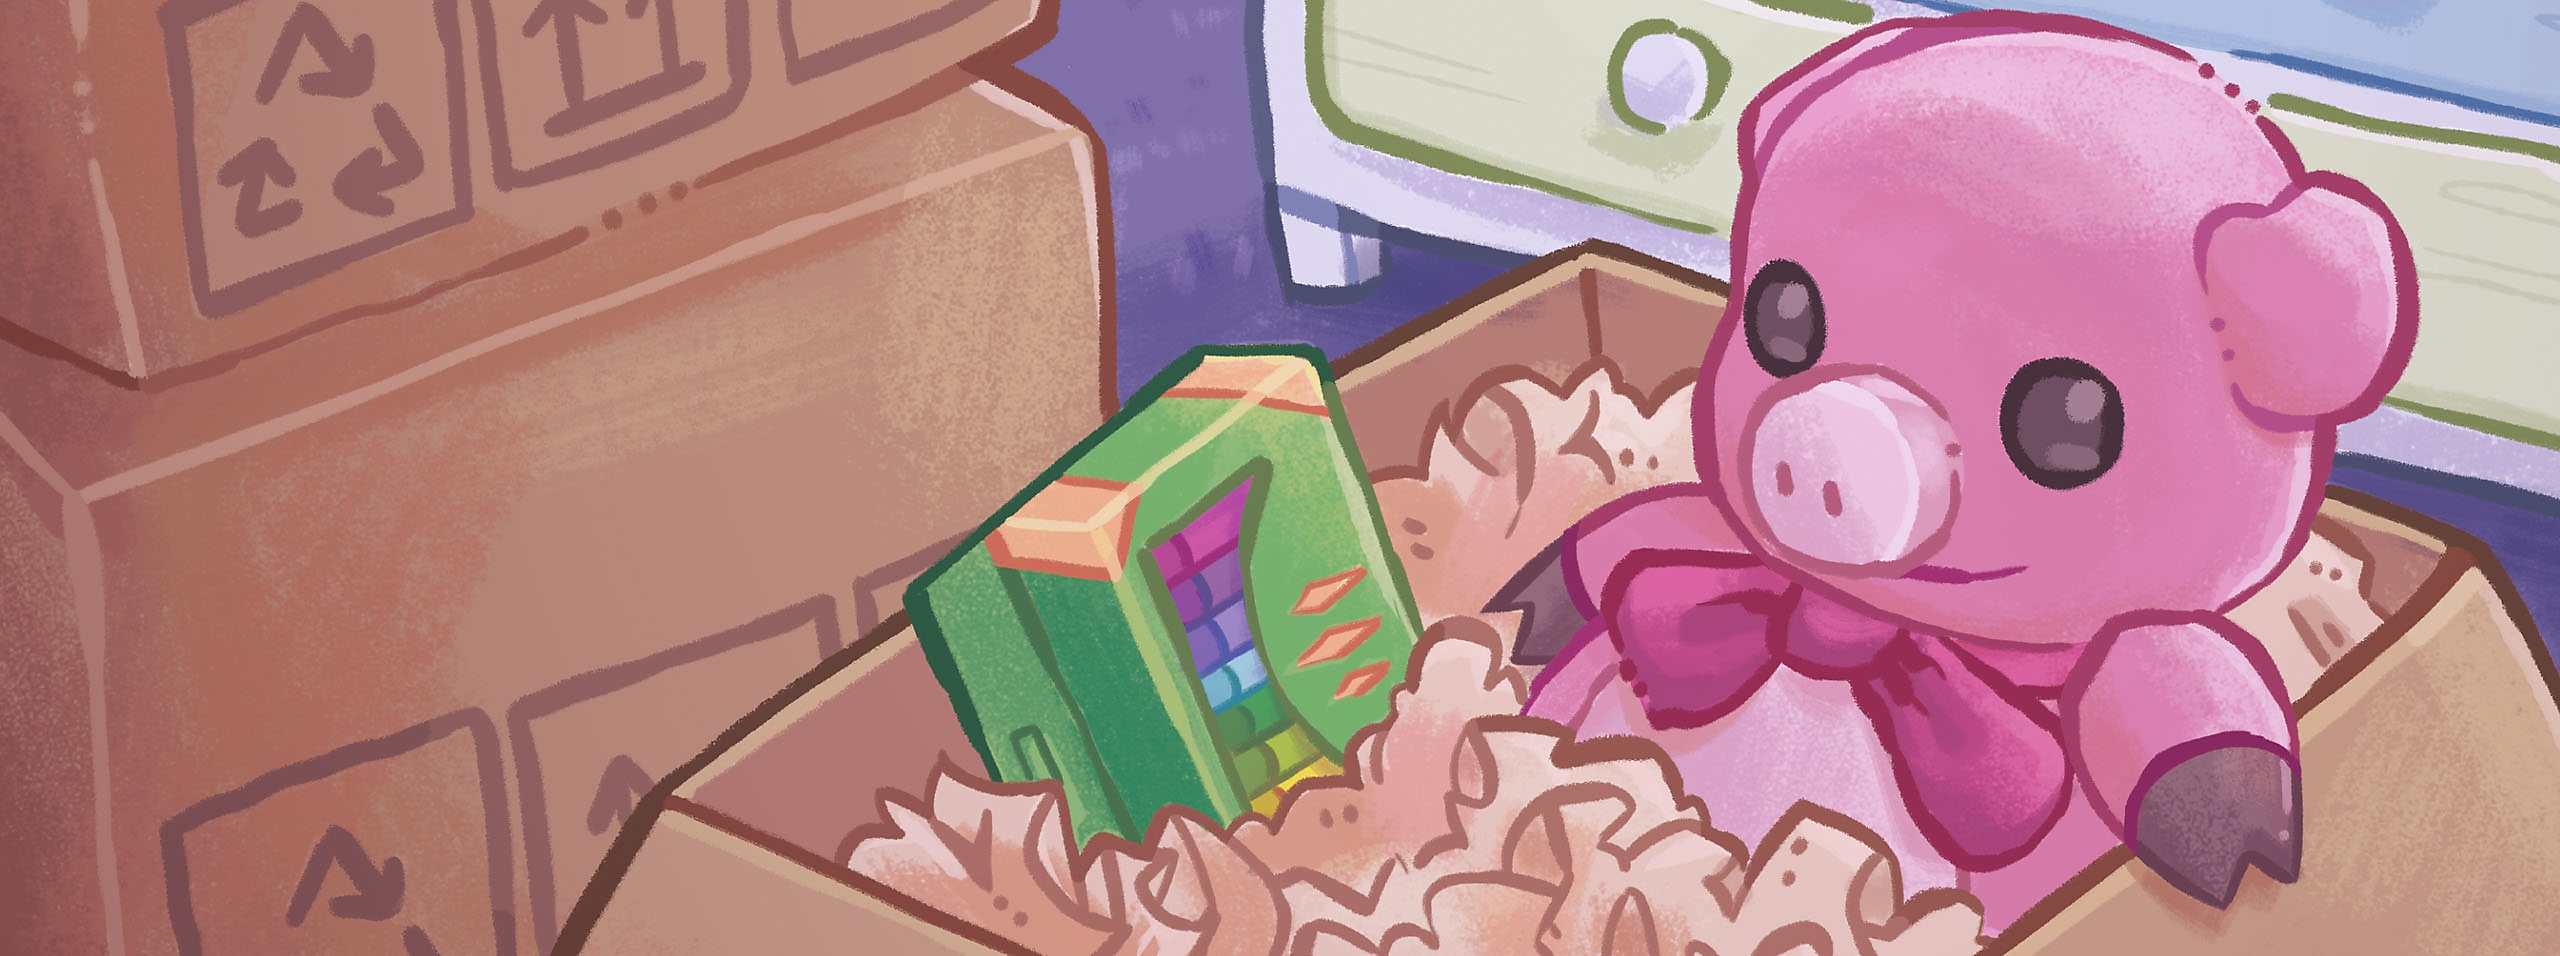 《Unpacking》首图美术，显示一个纸箱装着粉红猪玩偶